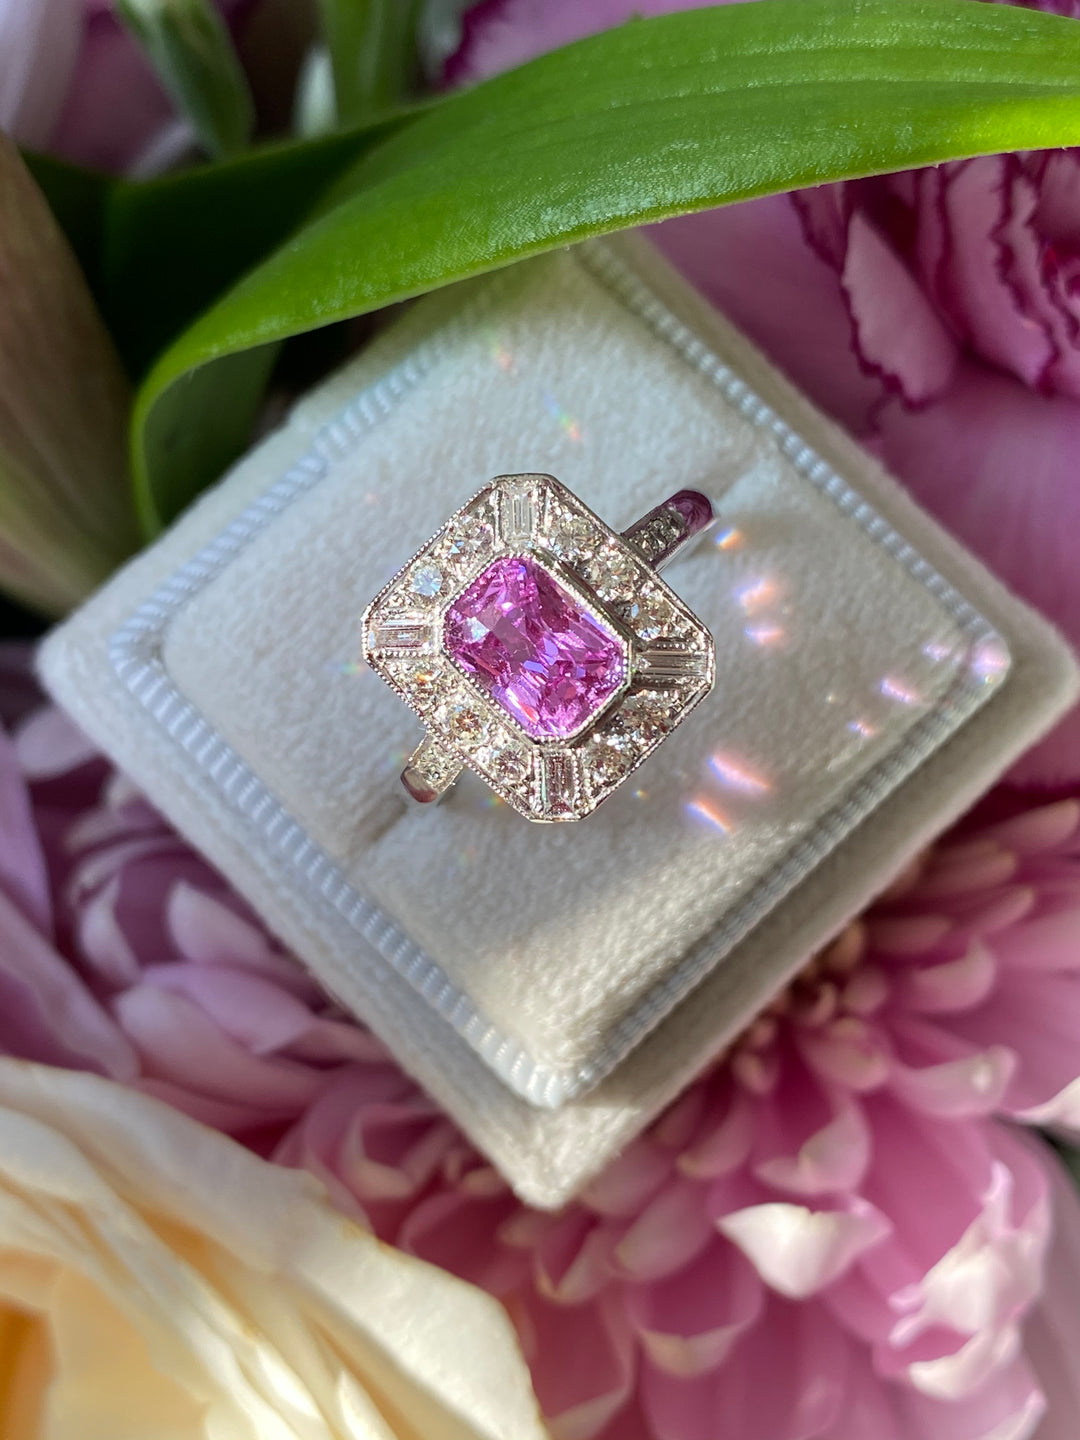 1 Carat Emerald Cut Pink Sapphire and Diamond Art Deco Engagement Ring in Platinum Katherine James Jewellery 